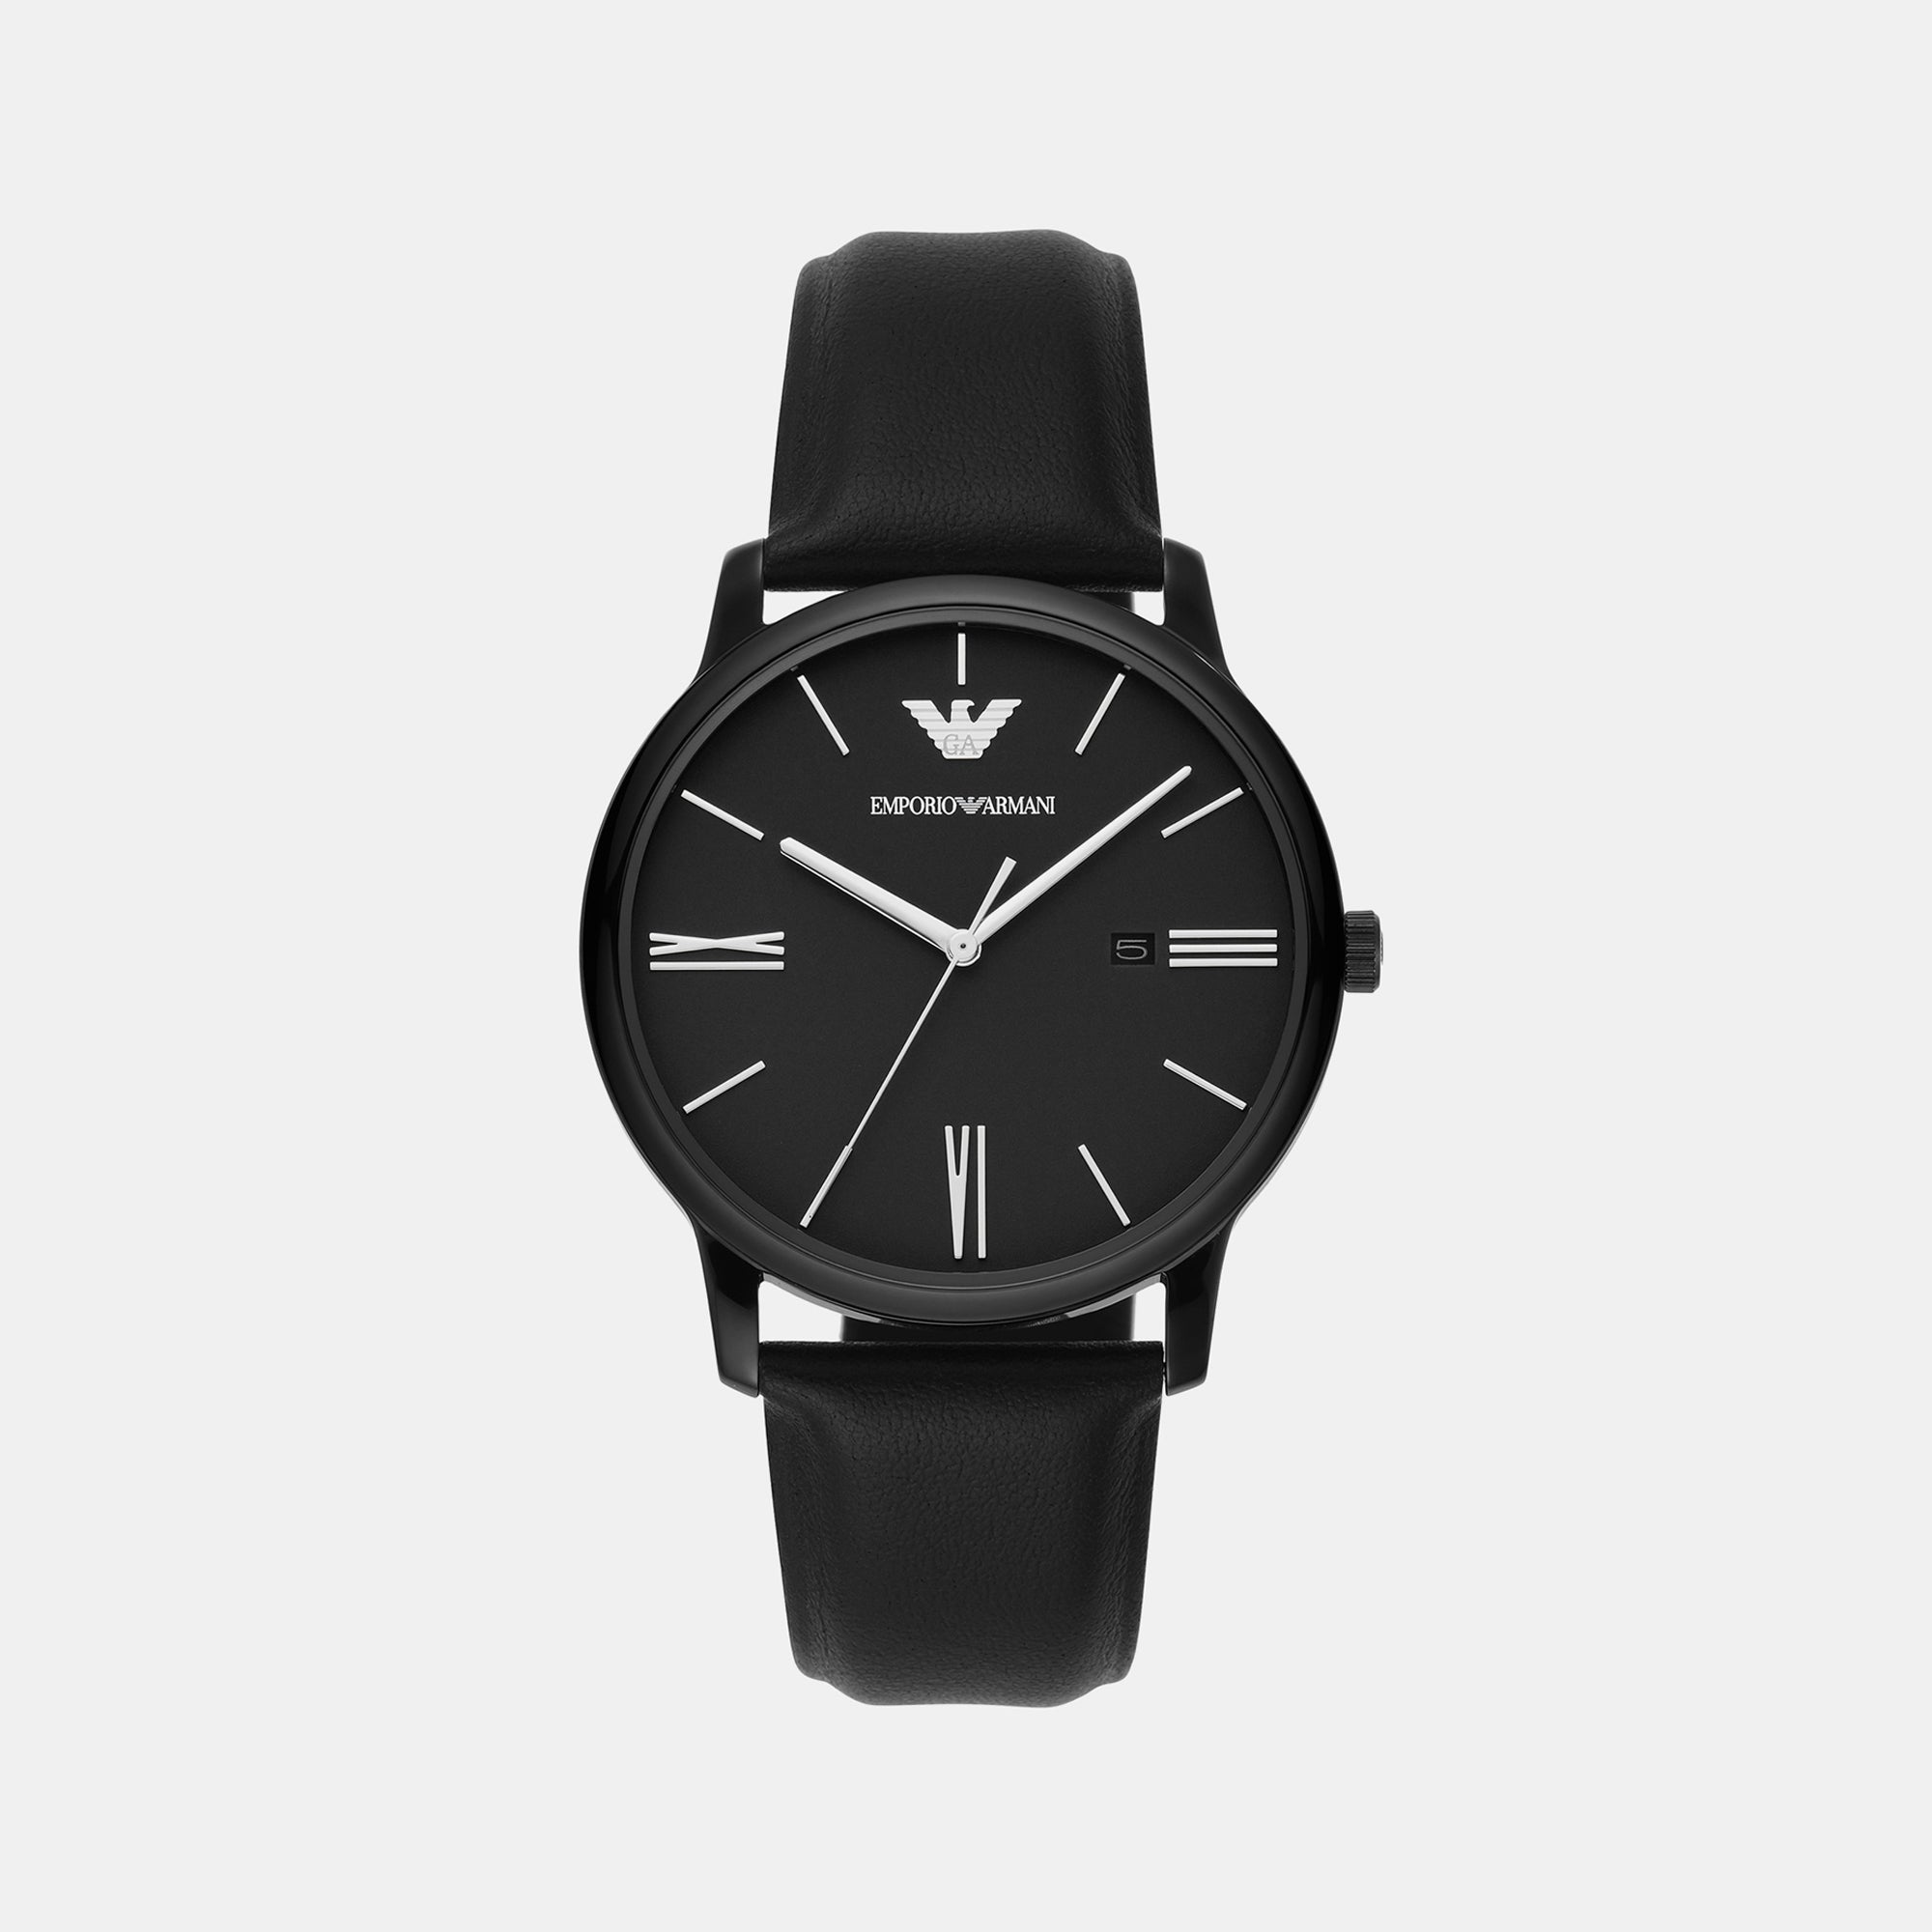 Arman I Premium Model Quartz Watch For Men